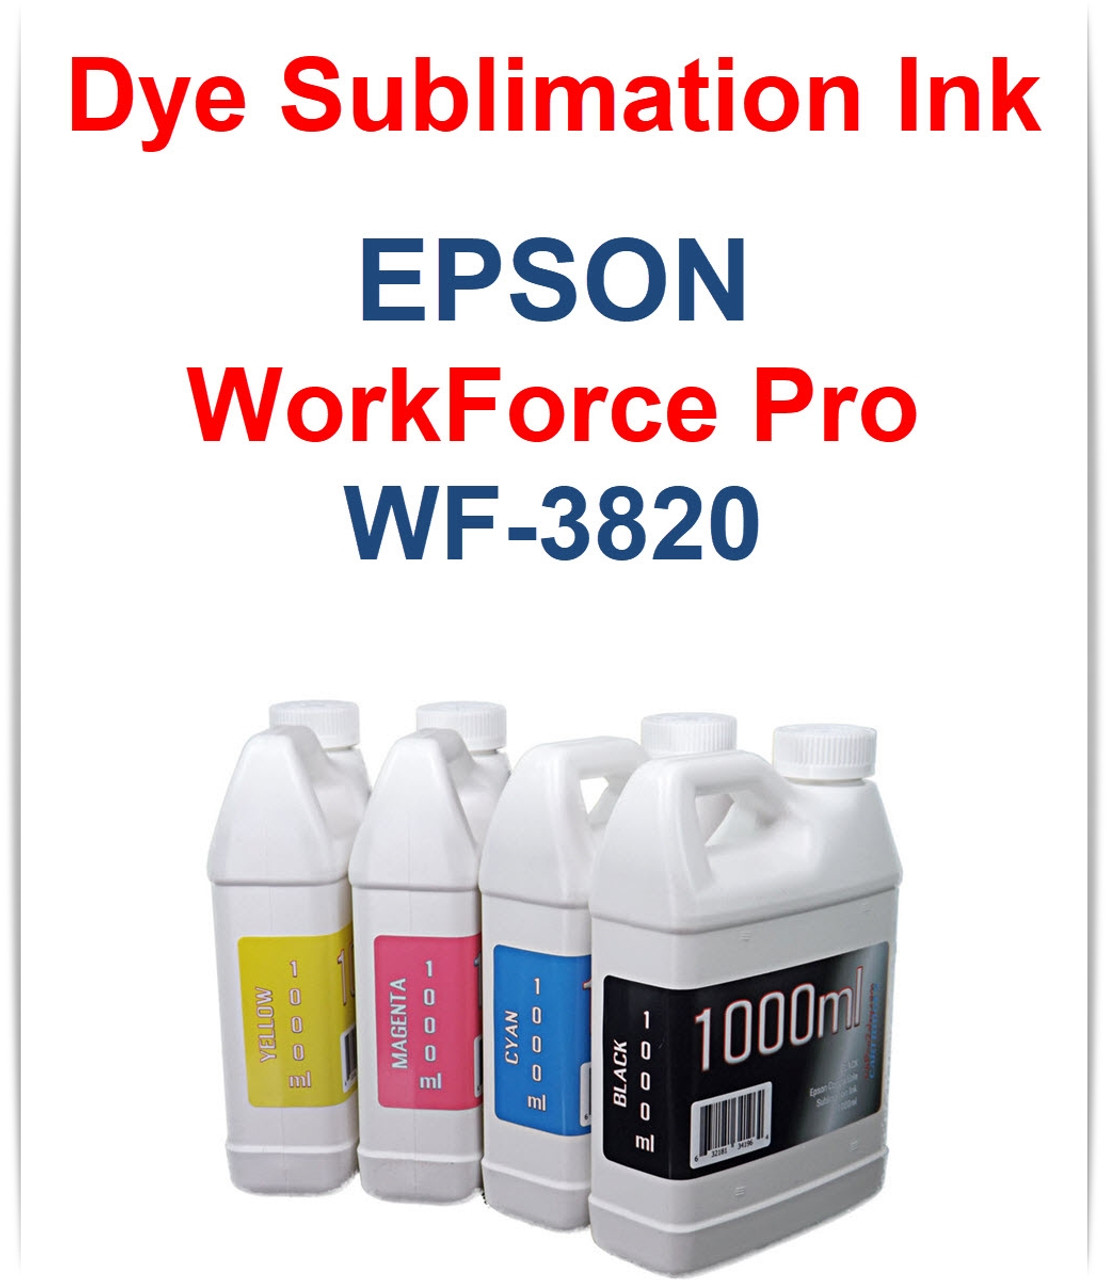 4- 1000ml bottles Dye Sublimation Ink for Epson WorkForce Pro WF-3820 Printer